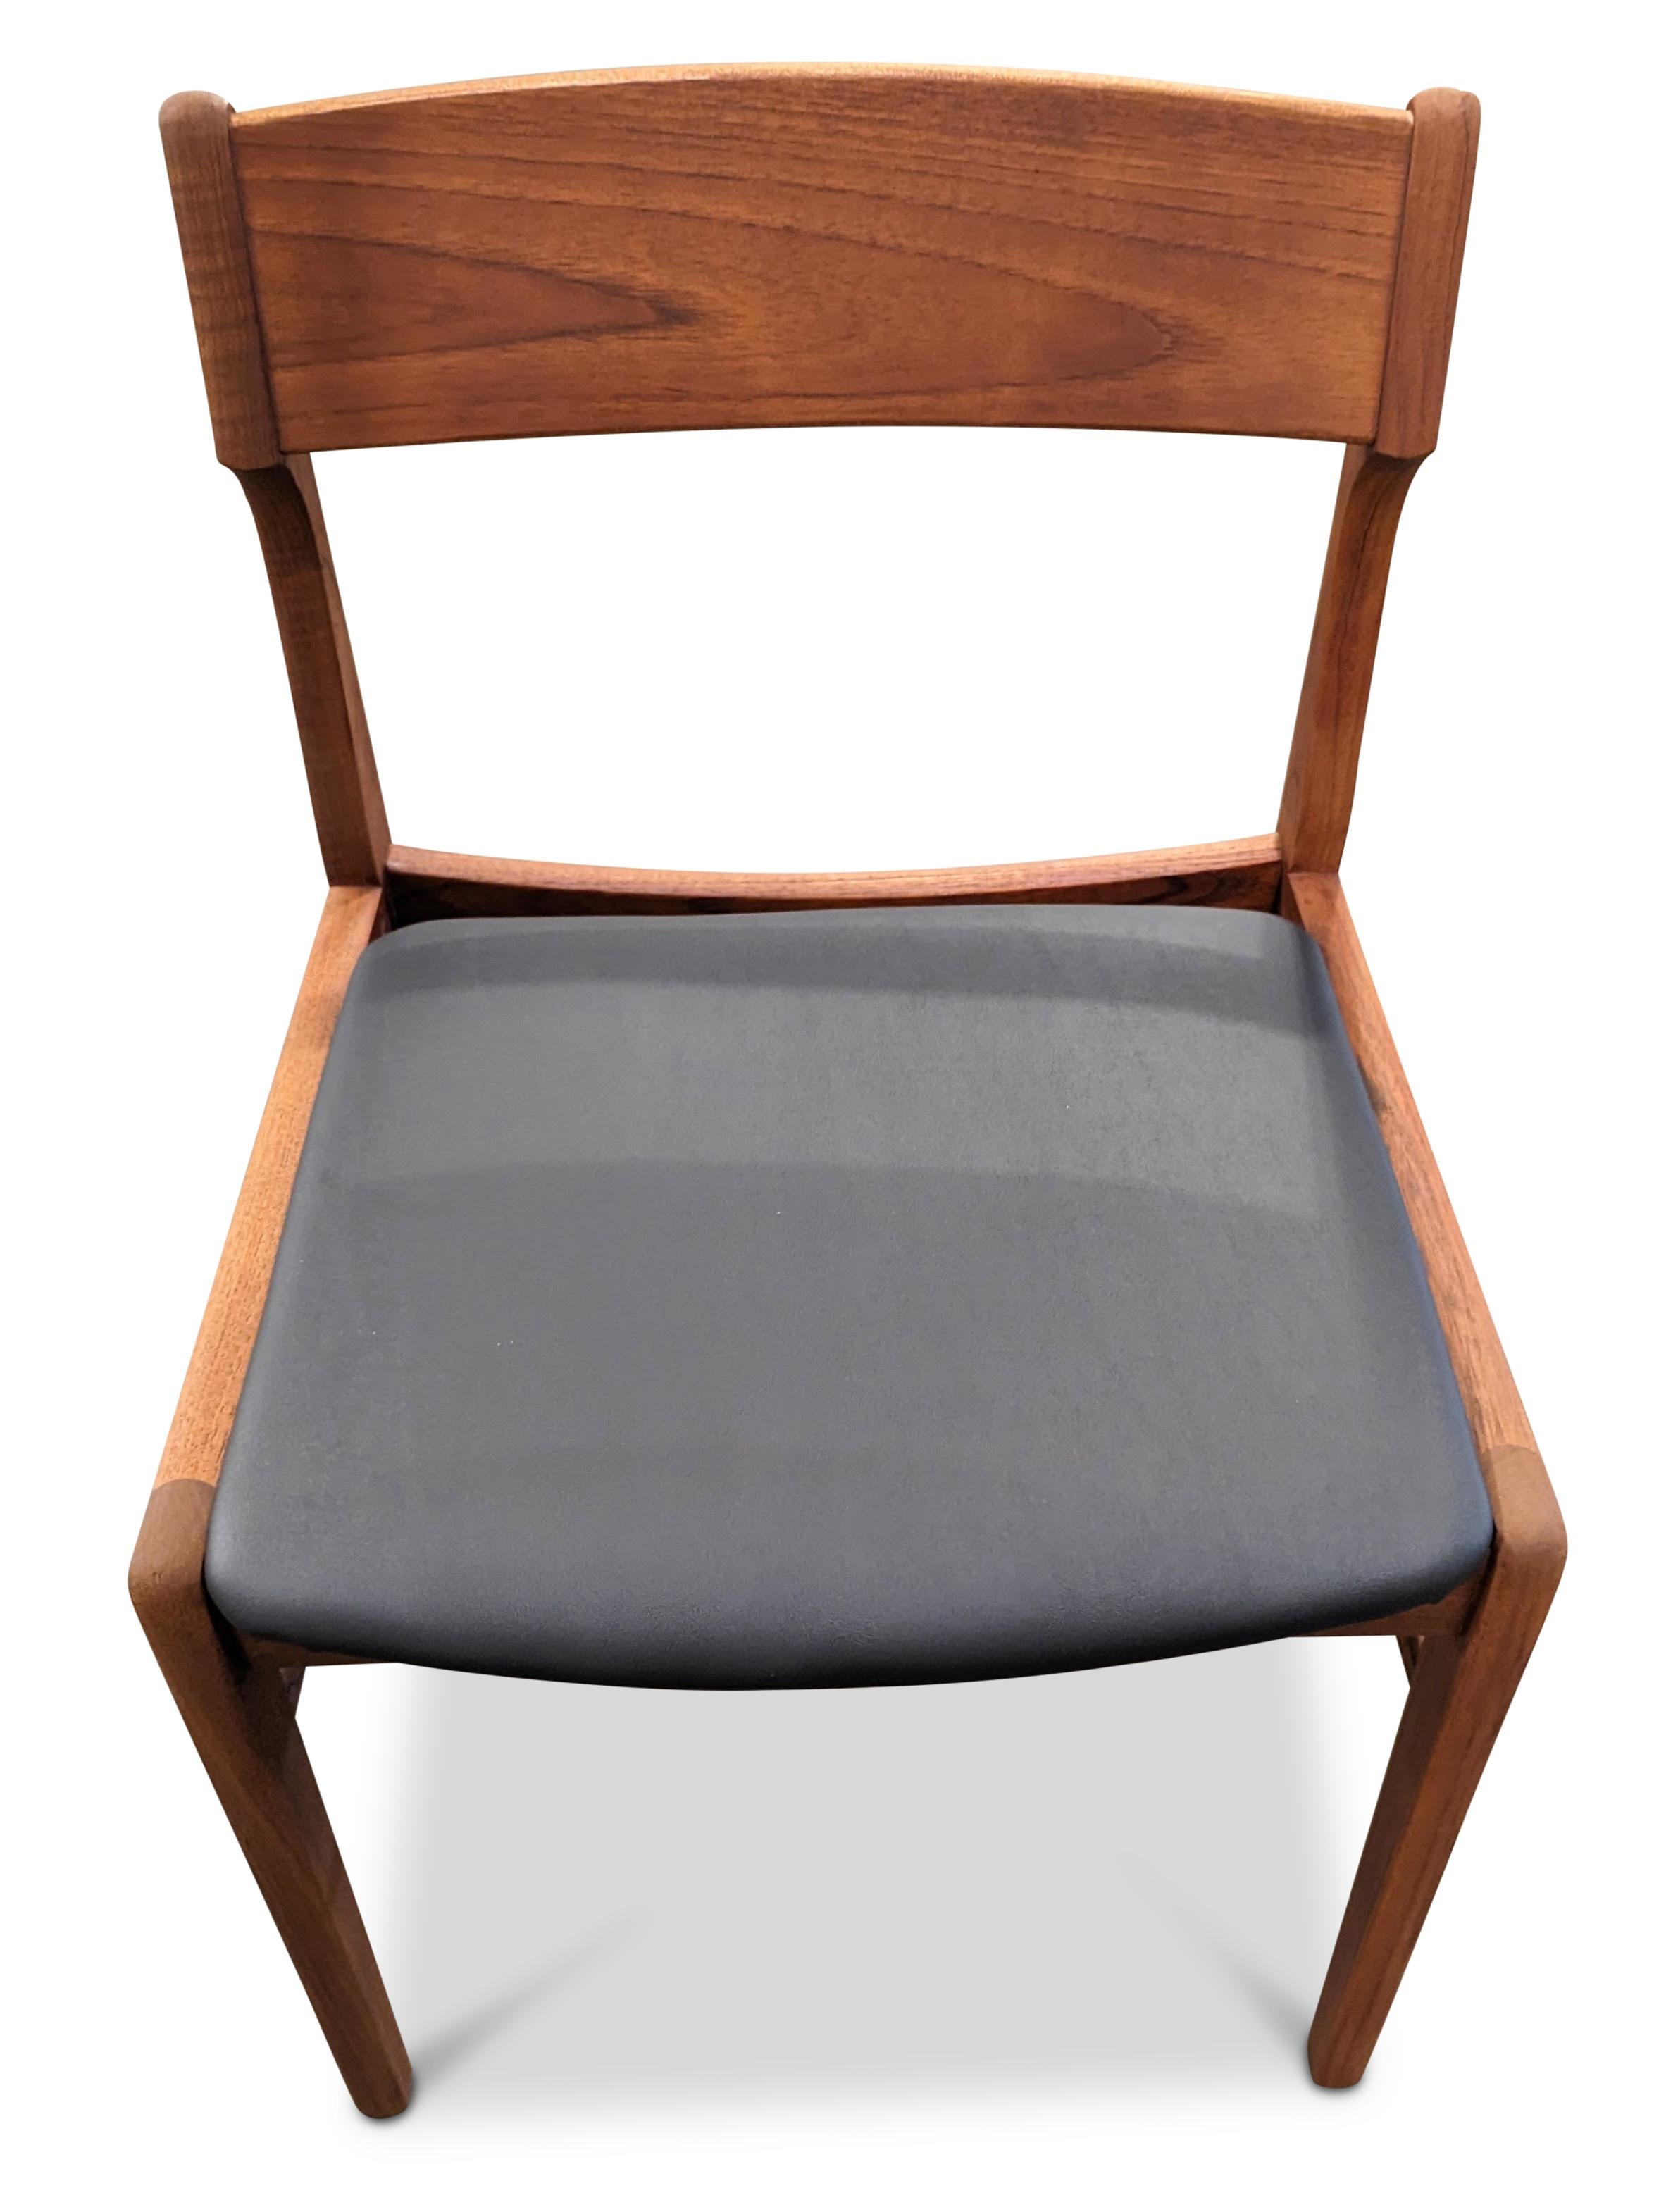 4 Vintage Danish Mid Century Teak Dining Chairs - 072307 2